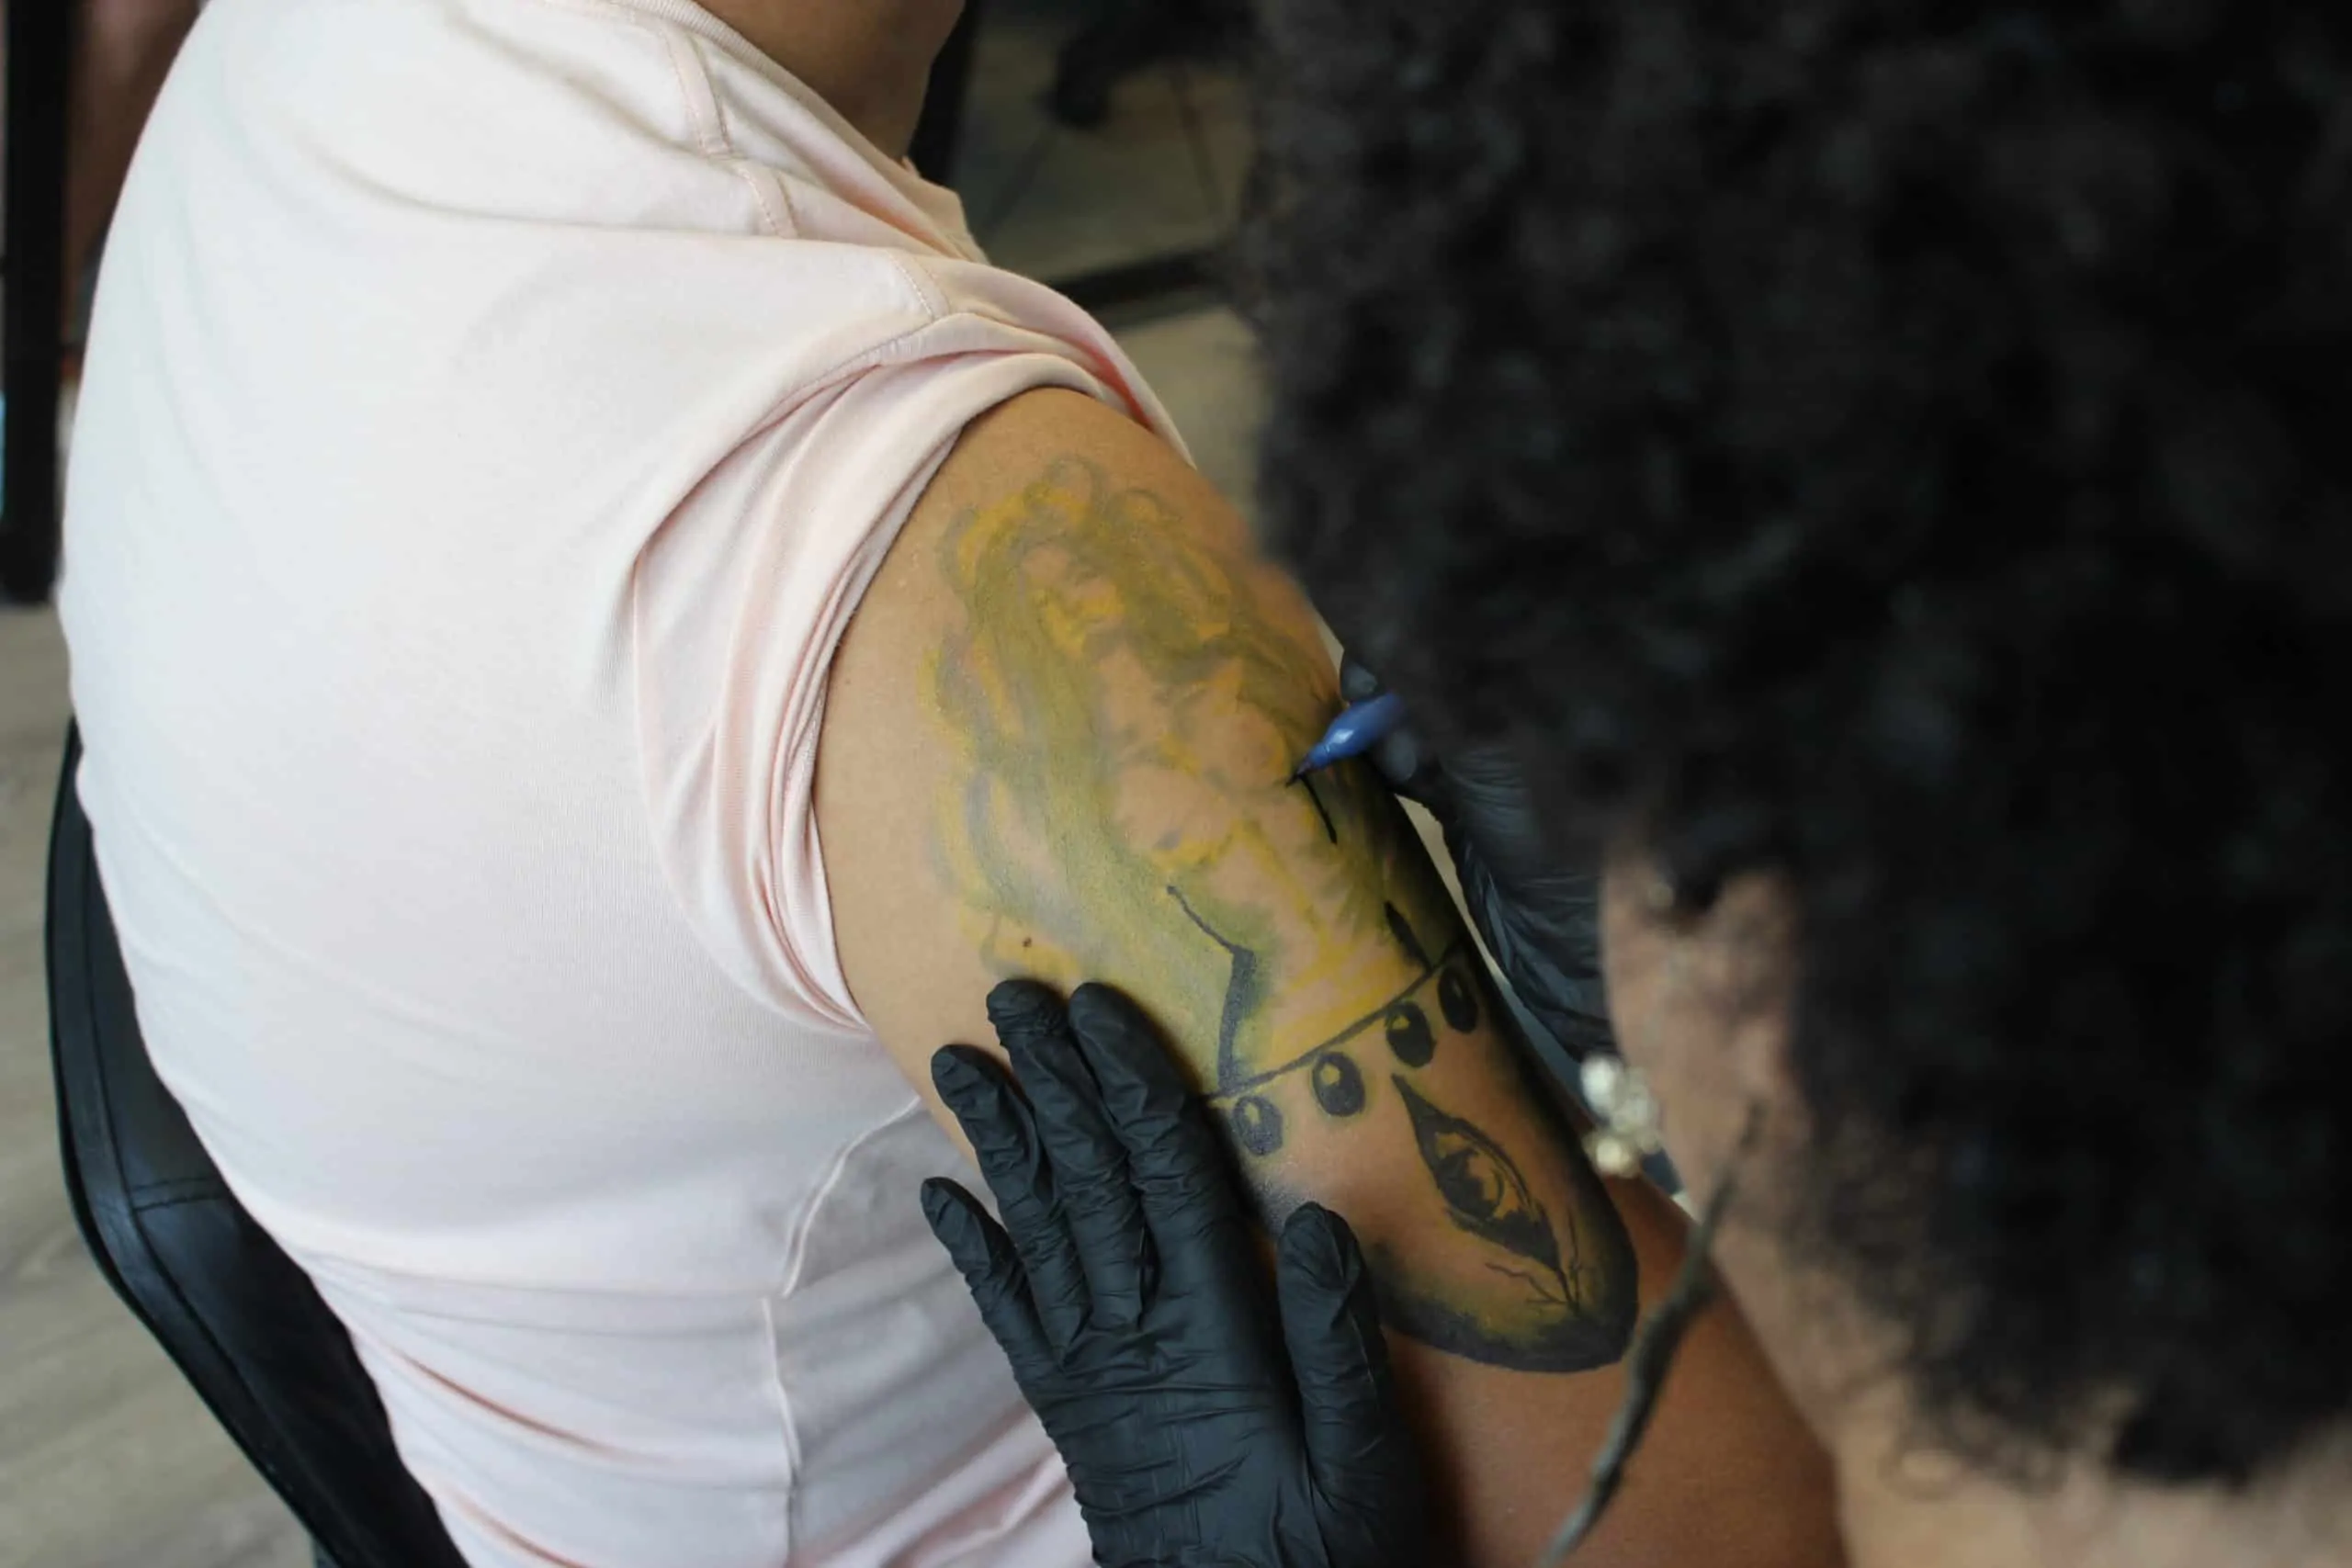 Tattoo artist sketching on arm